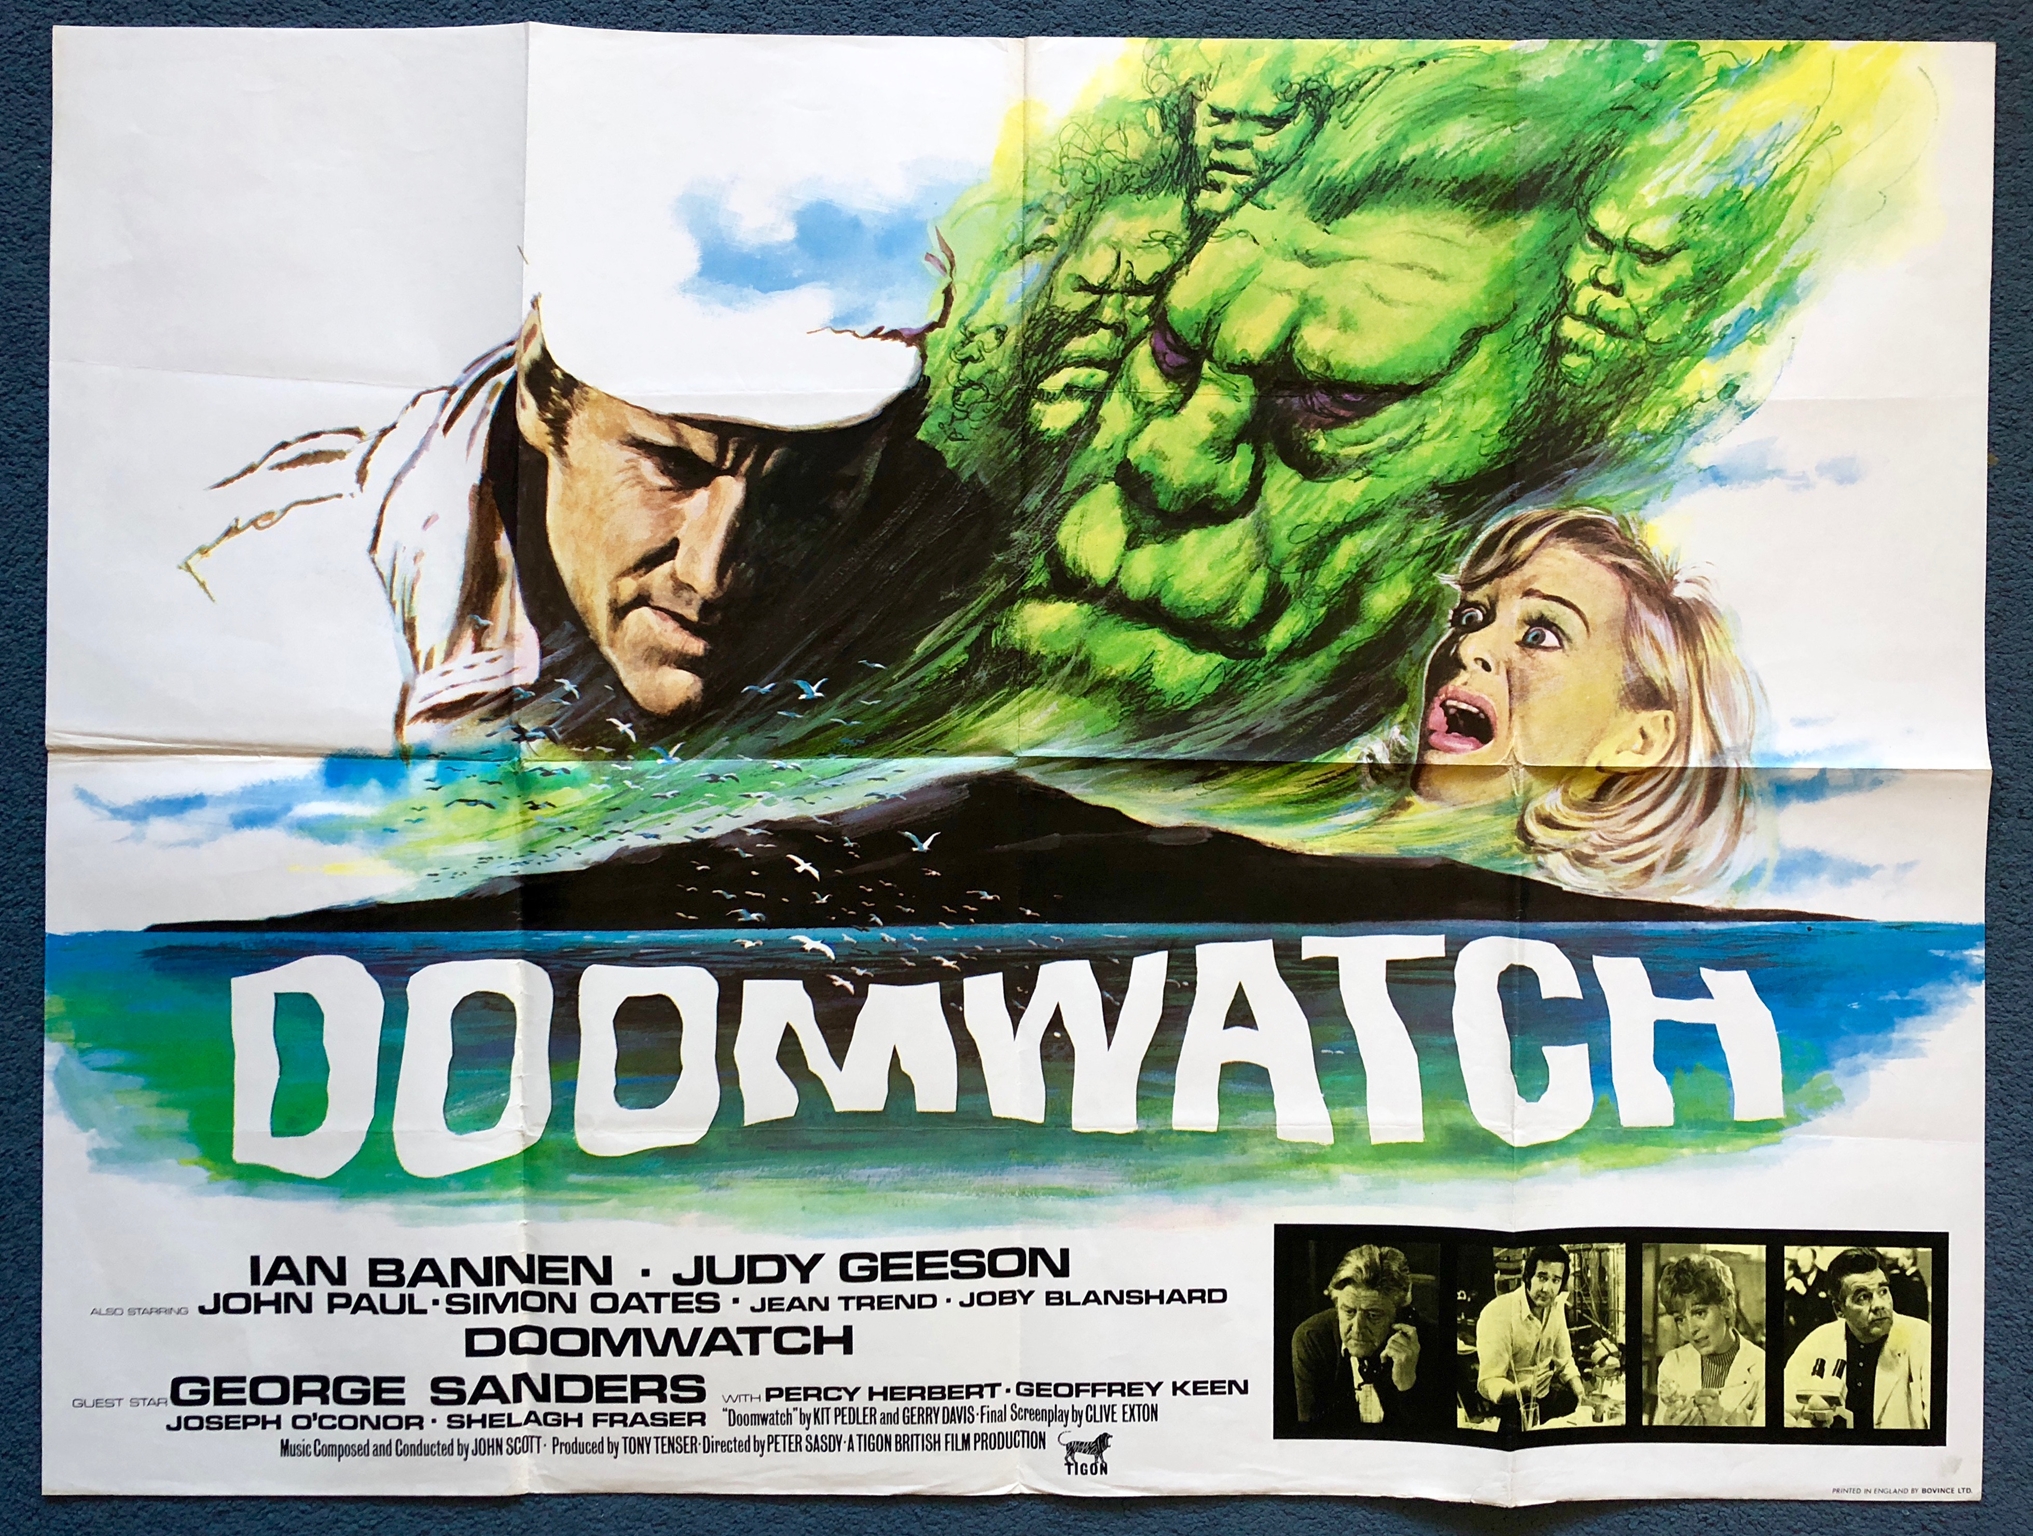 DOOMWATCH (1972) - British UK Quad Film Poster - TIGON/TONY TENSER - Tom Chantrell artwork - 30" x